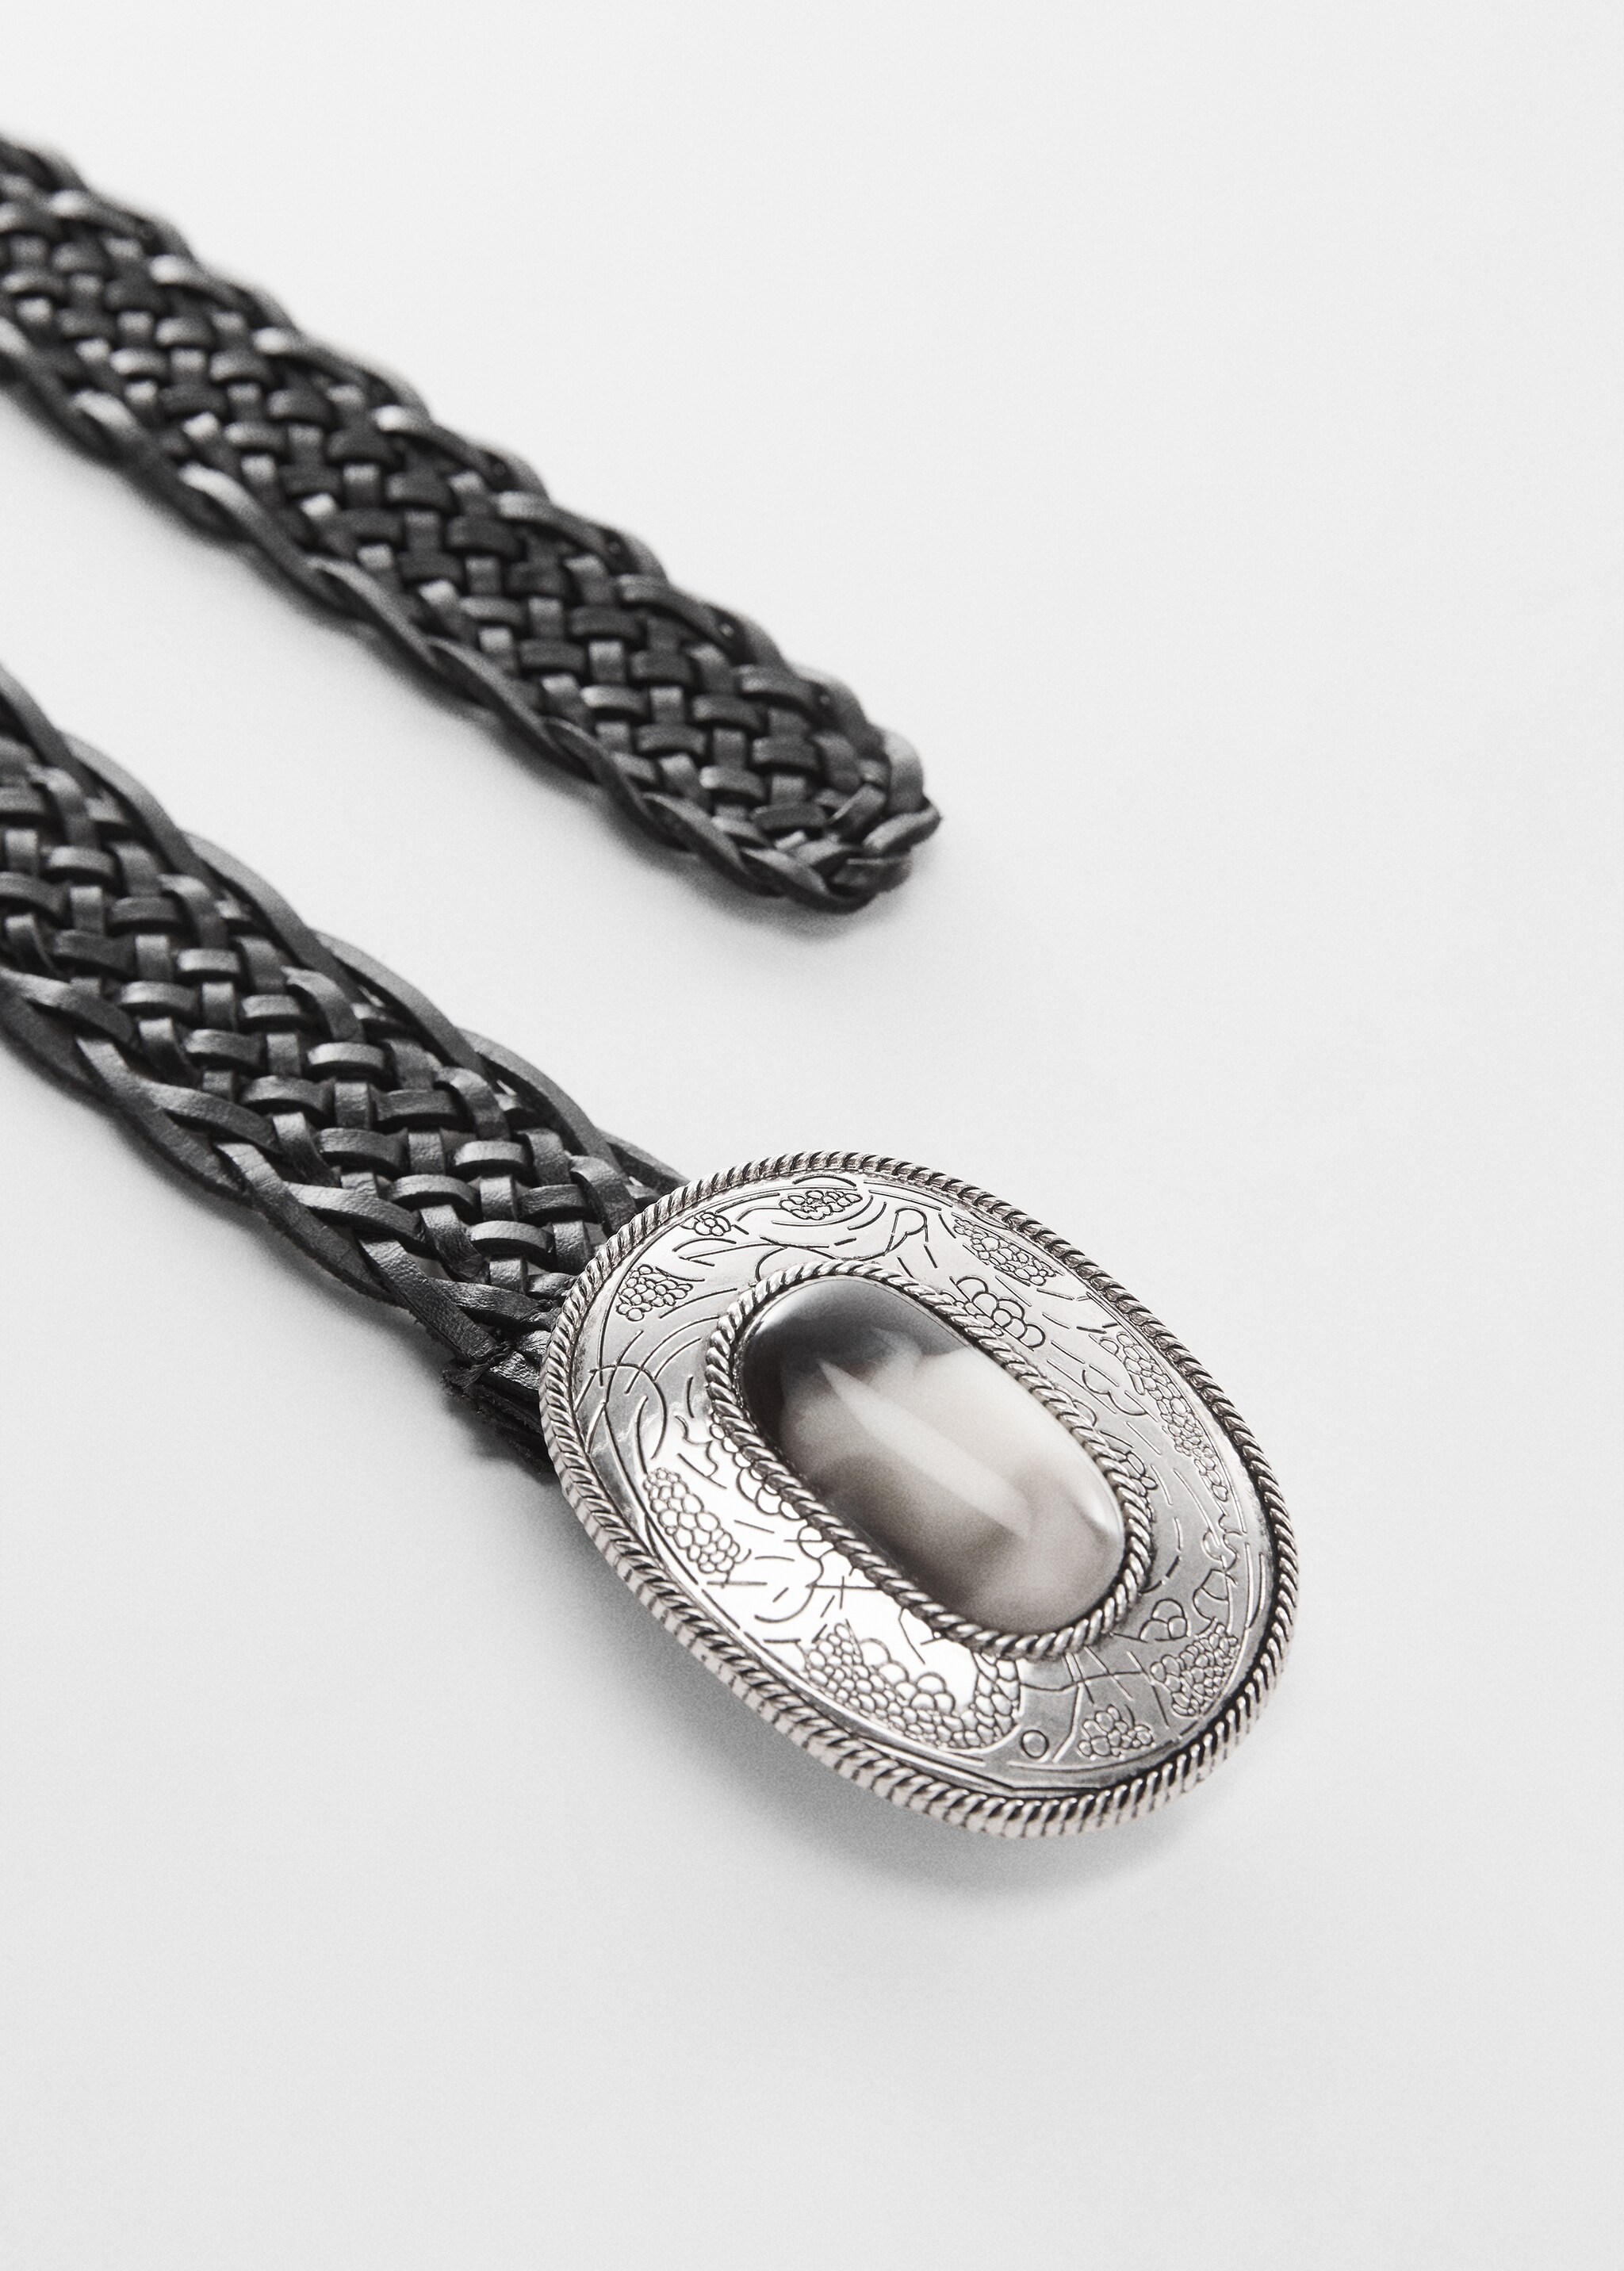 Engraved buckle leather belt - Medium plane